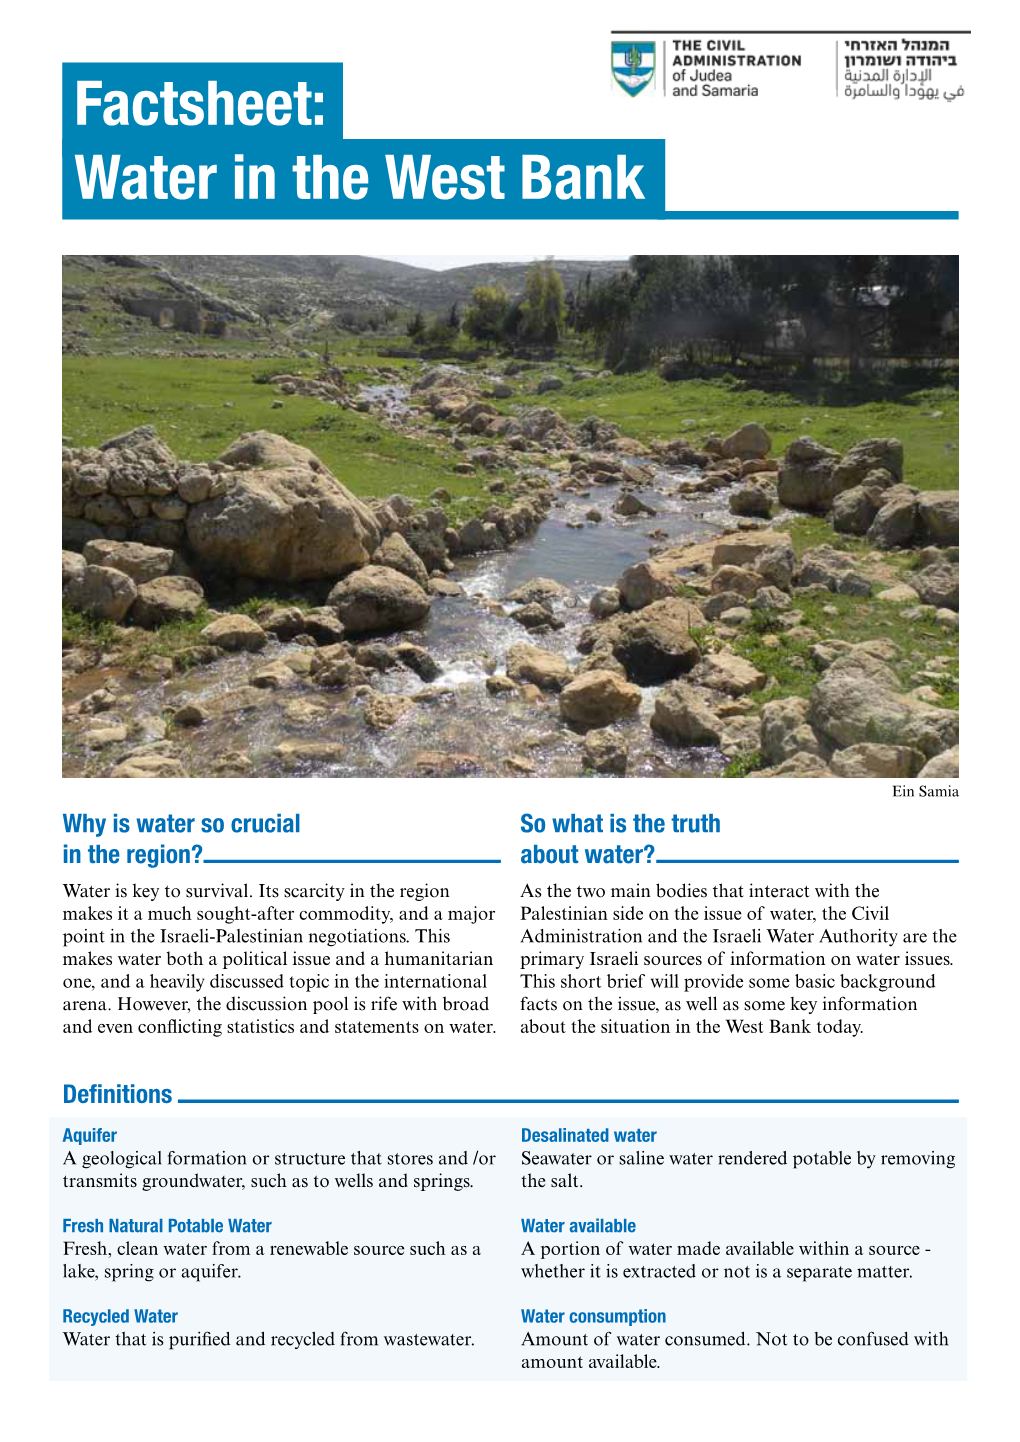 Factsheet: Water in the West Bank